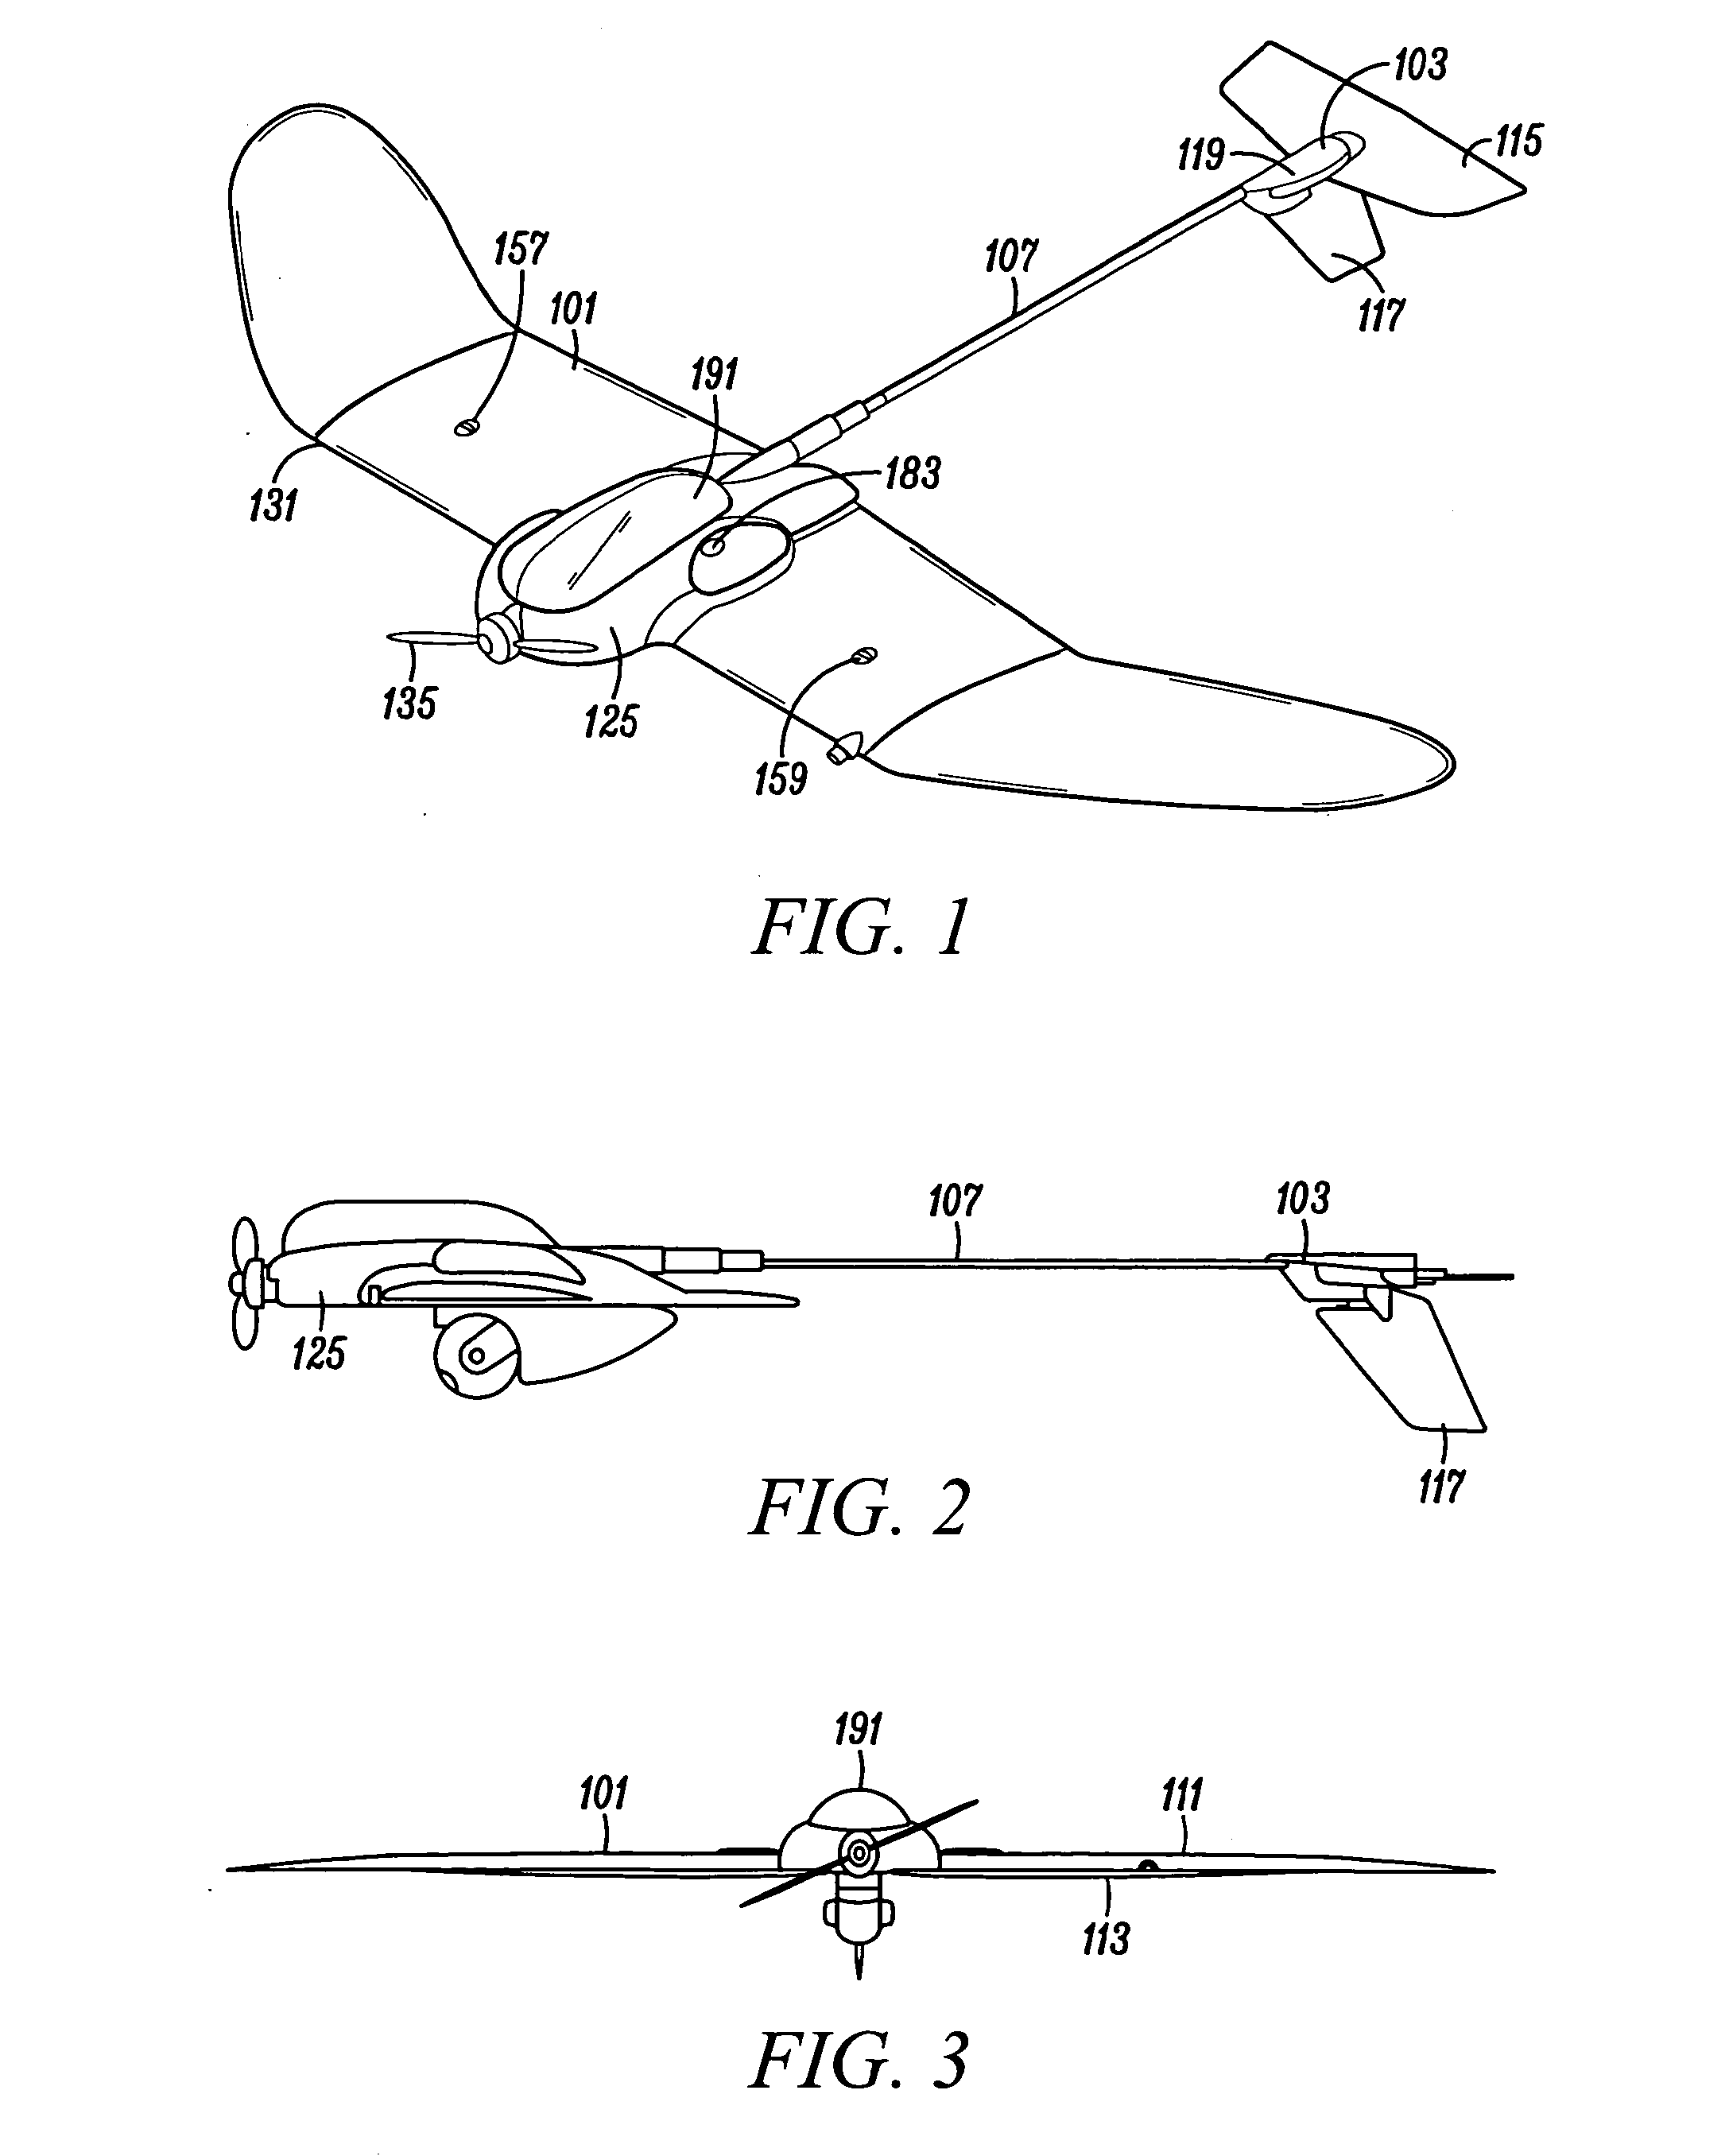 Inverted-landing aircraft